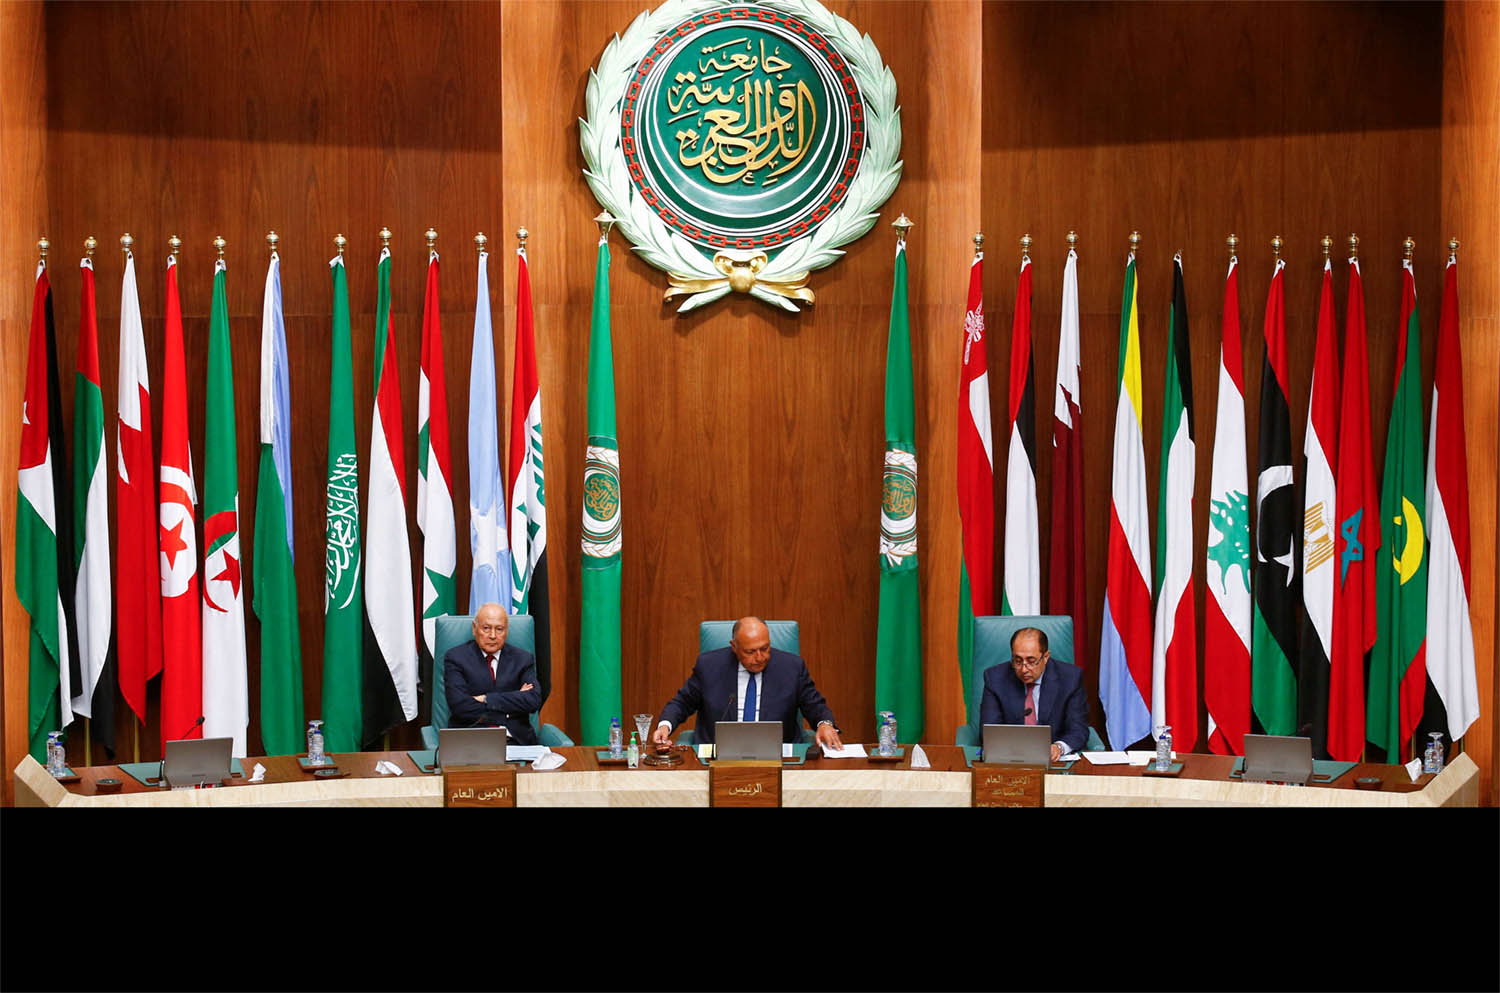 The Arab League summit